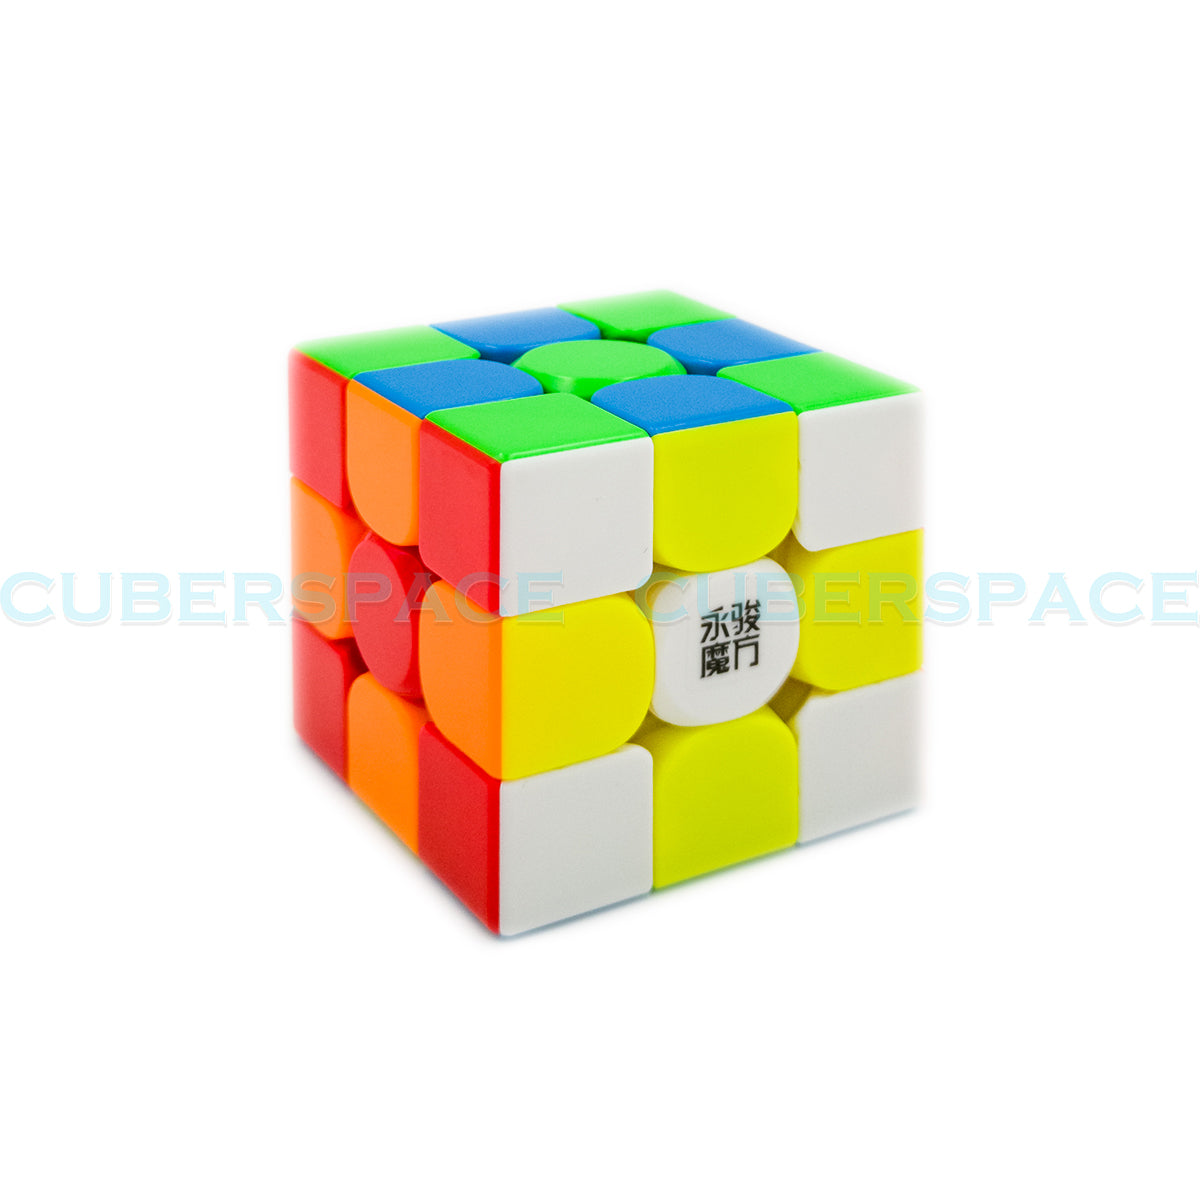 Yongjun YJ Zhilong mini 3x3 magnetic speedcube stickerless